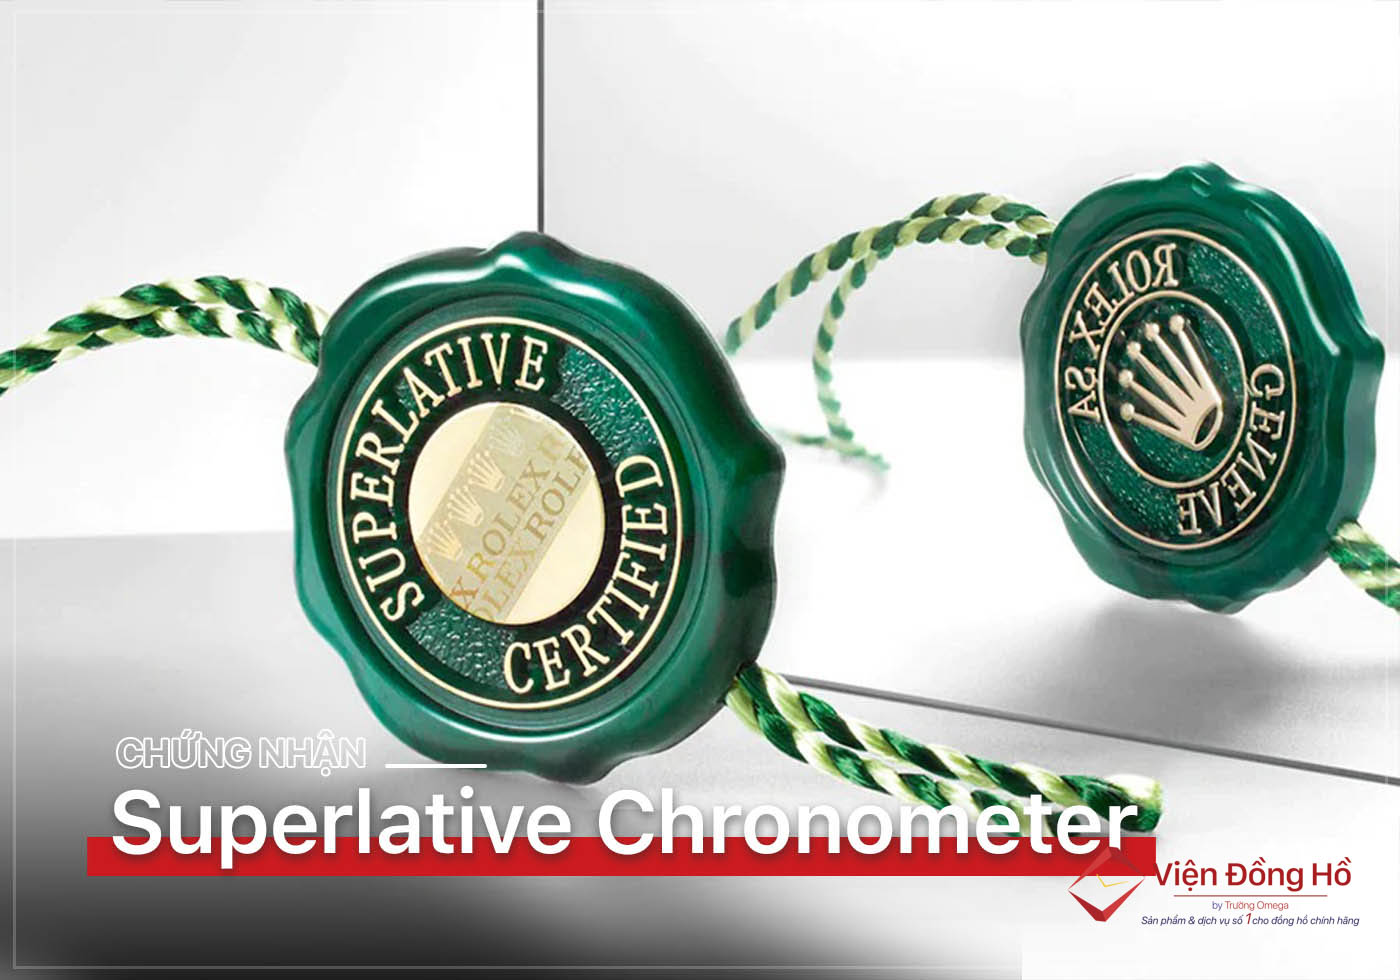 Chung nhan Superlative Chronometer danh gia cua Rolex 7